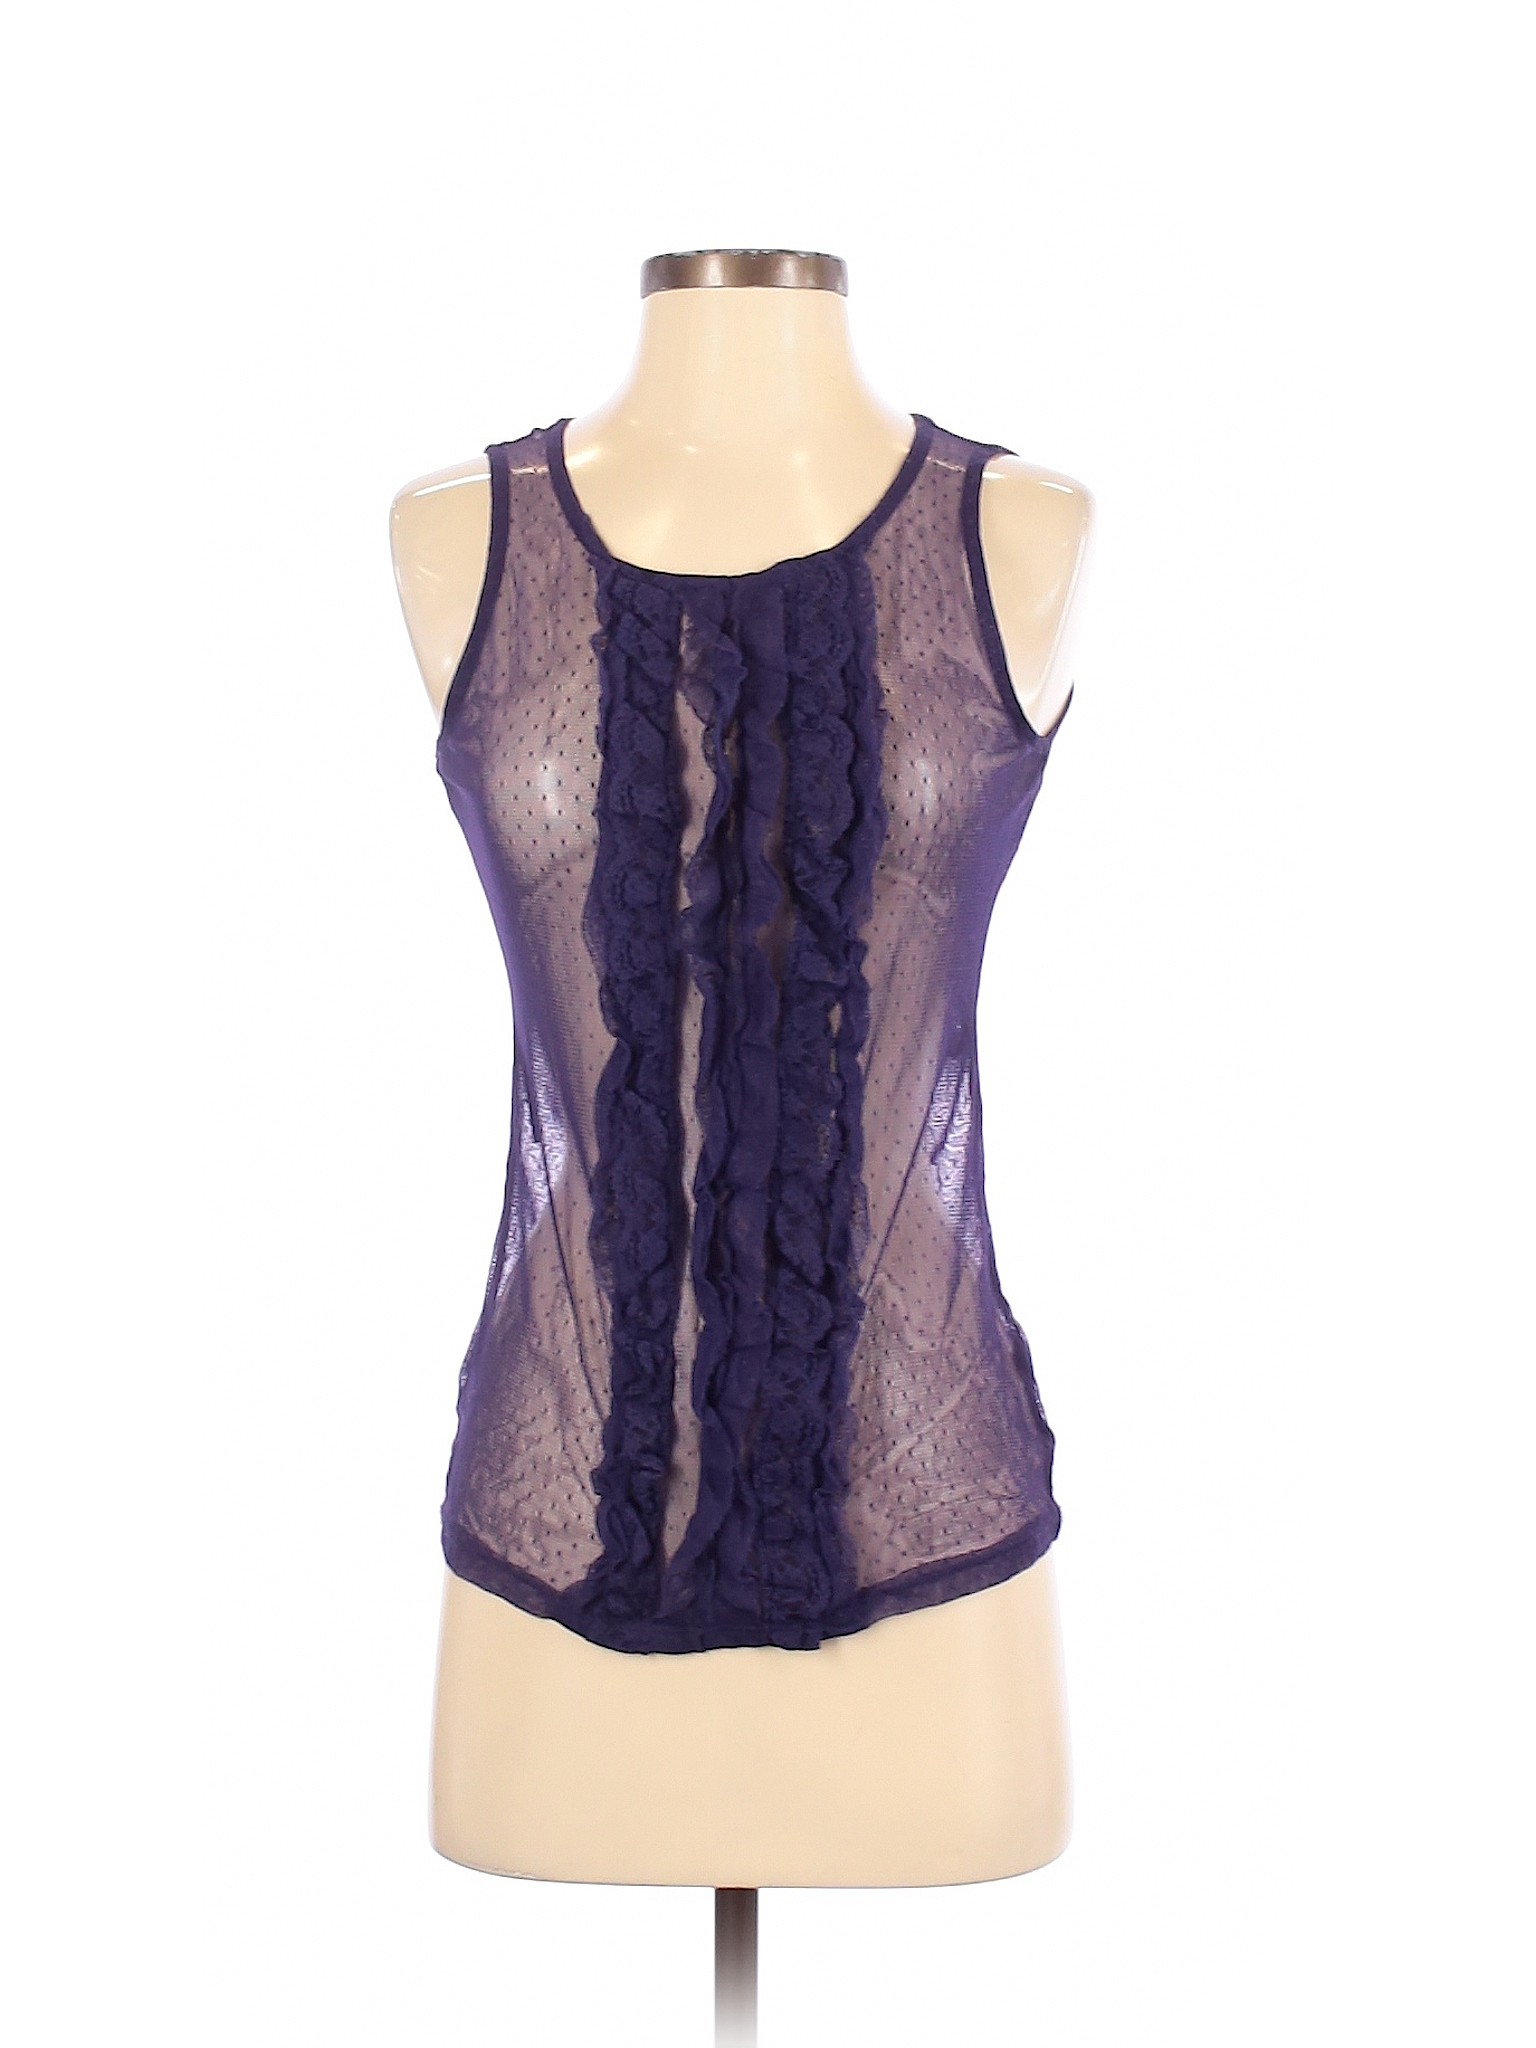 The Limited Women Purple Sleeveless Top S | eBay